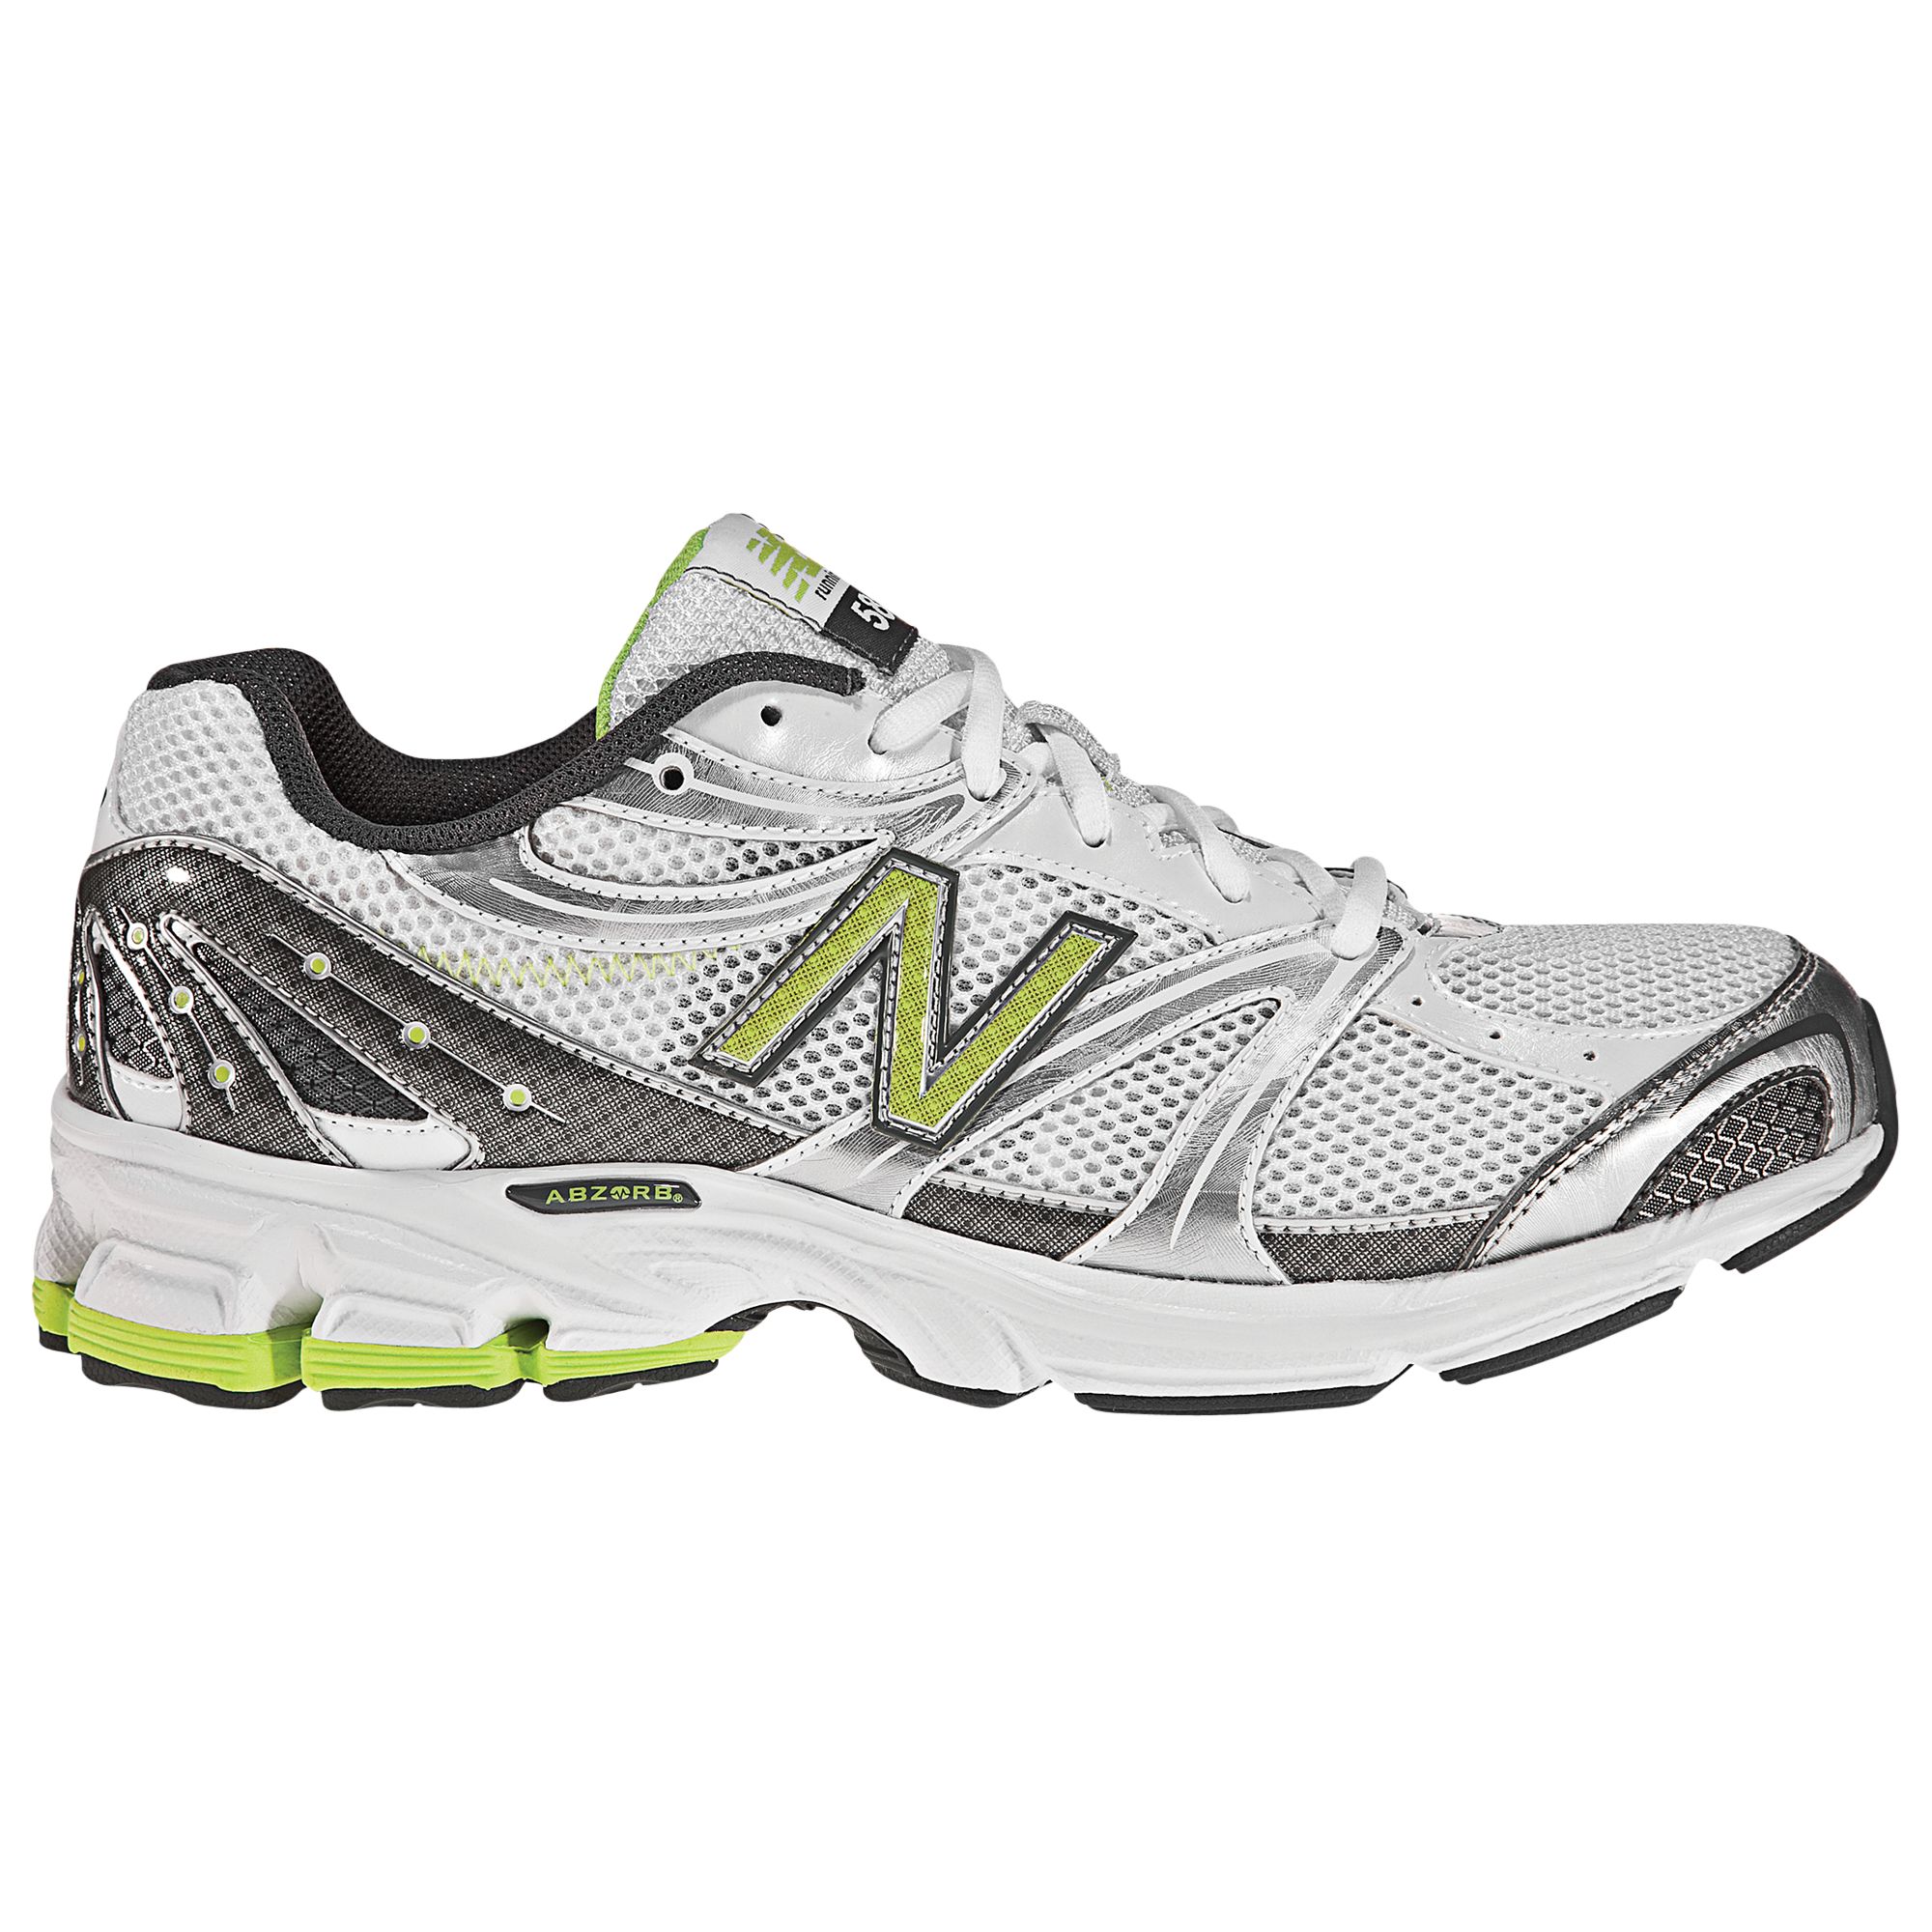 New Balance 580 Neutral Mens Running Shoes,